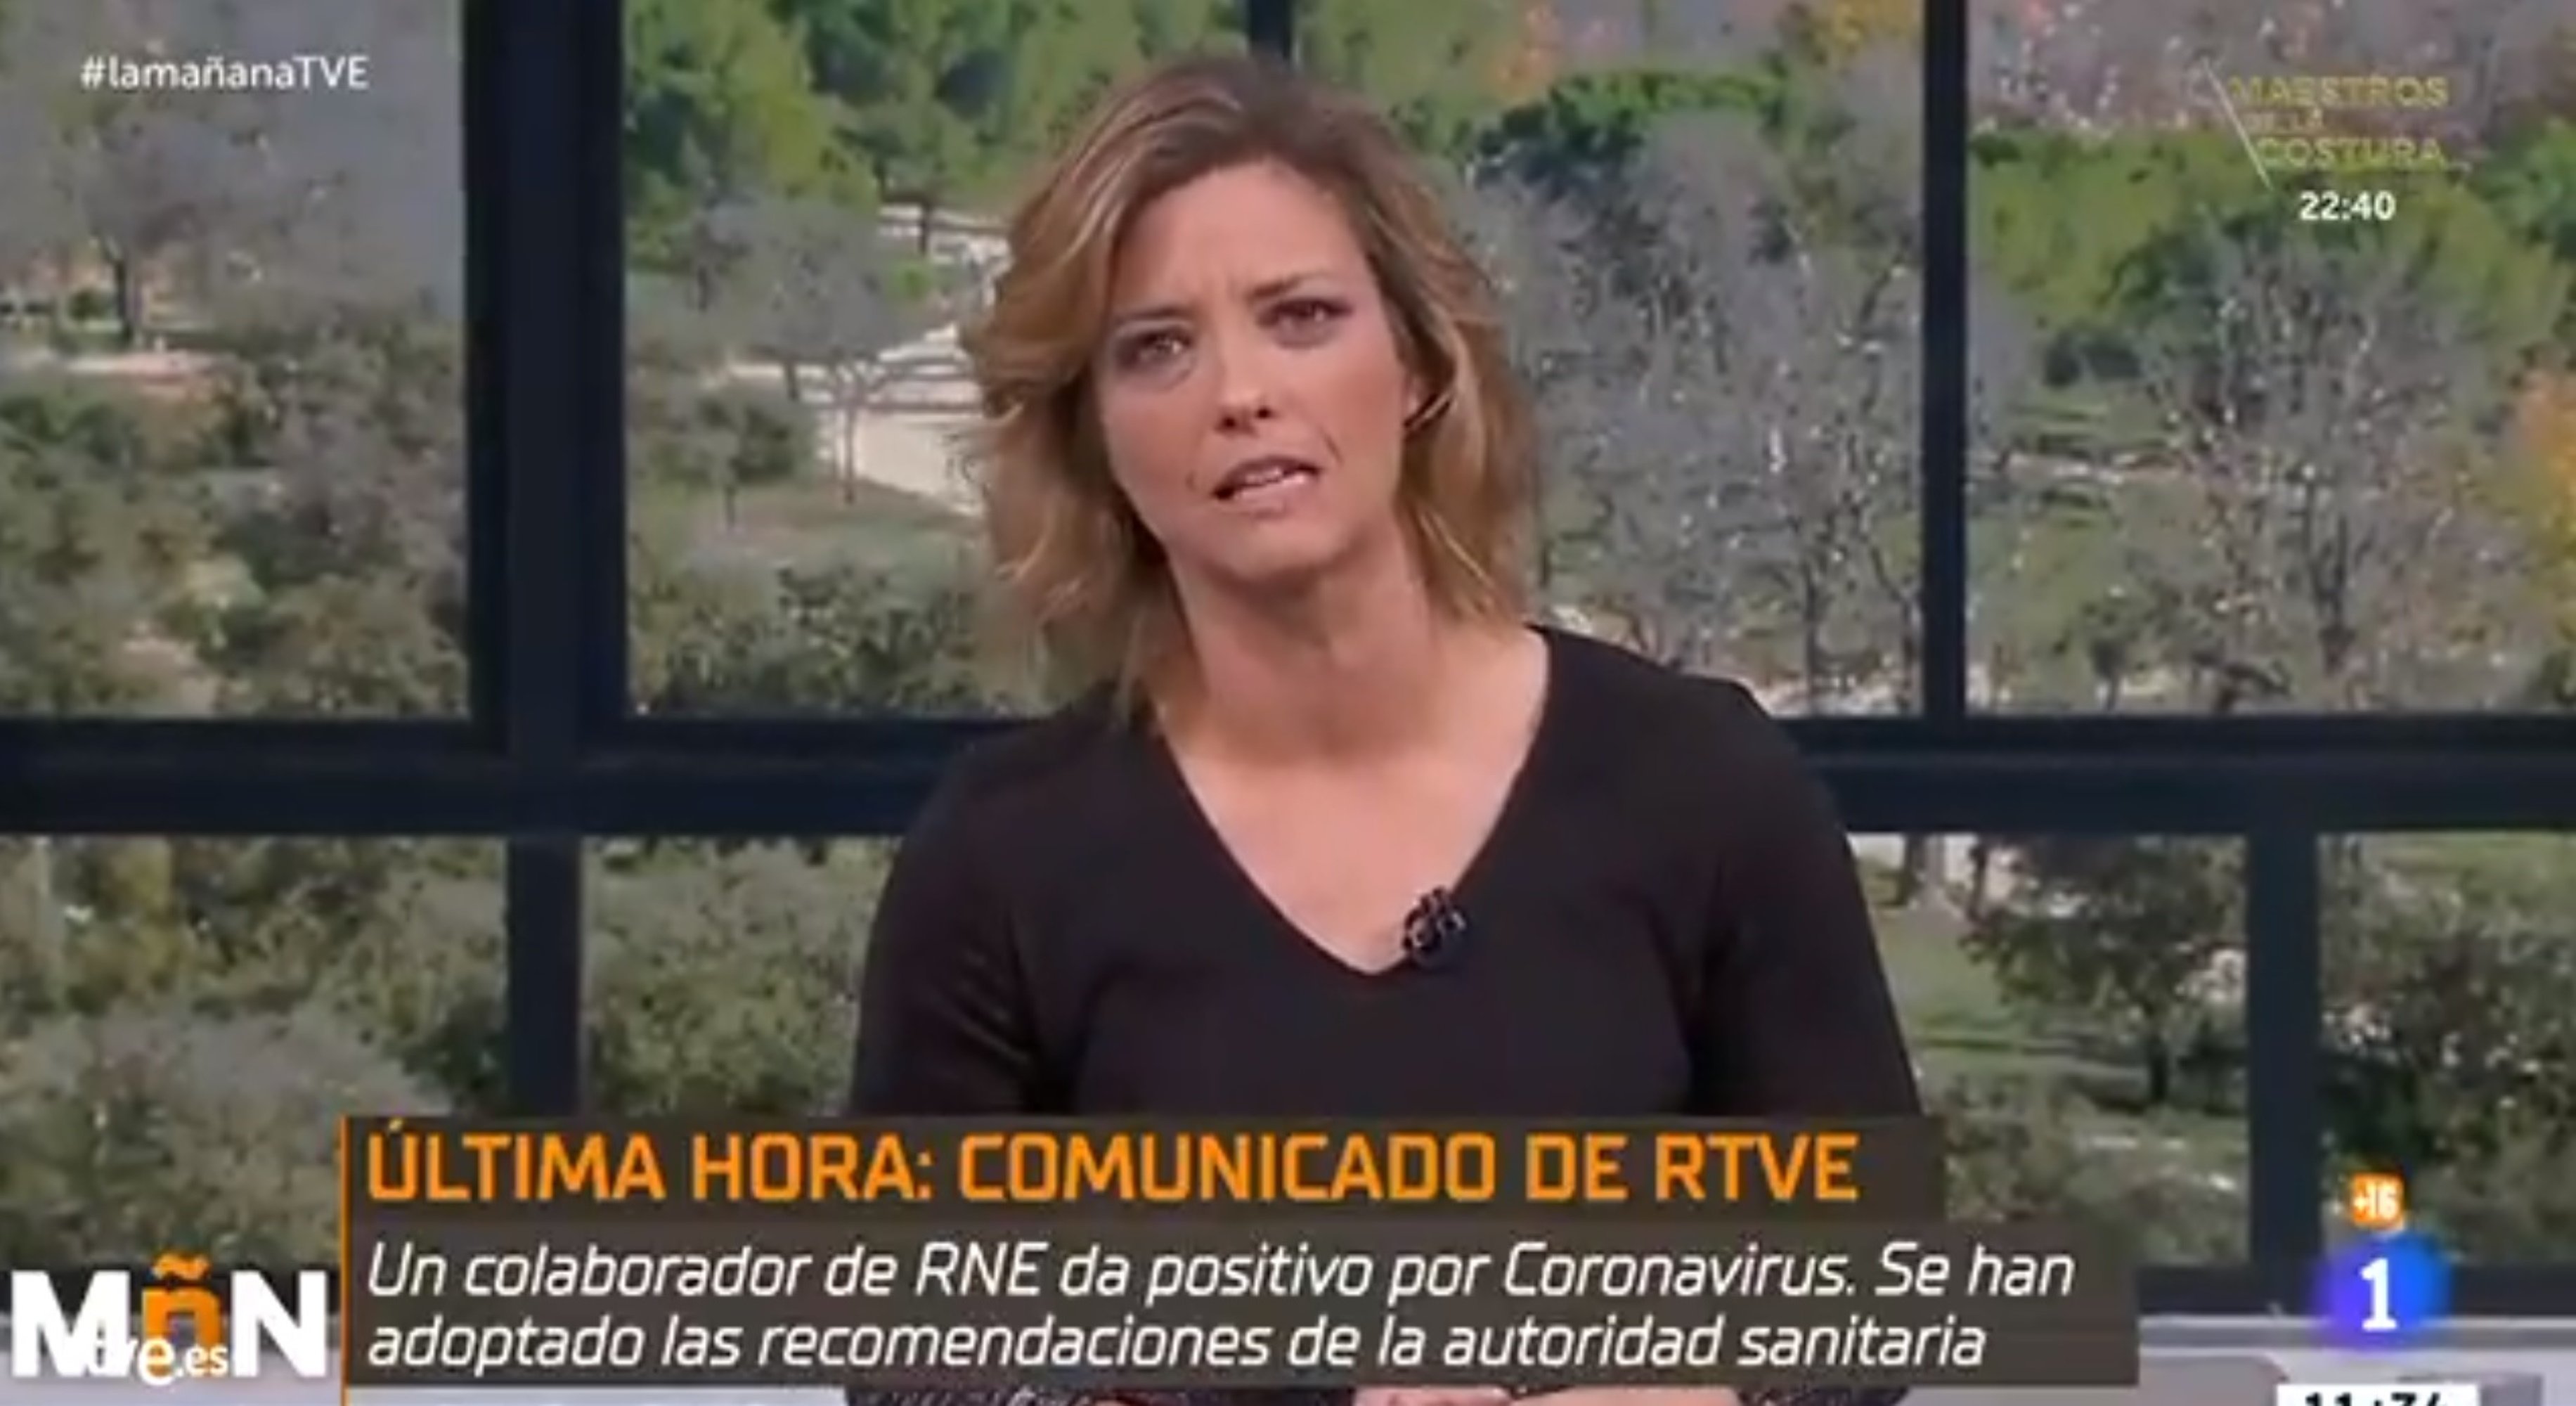 María Casado informa d'un cas de coronavirus a RTVE: "Se están tomando medidas"